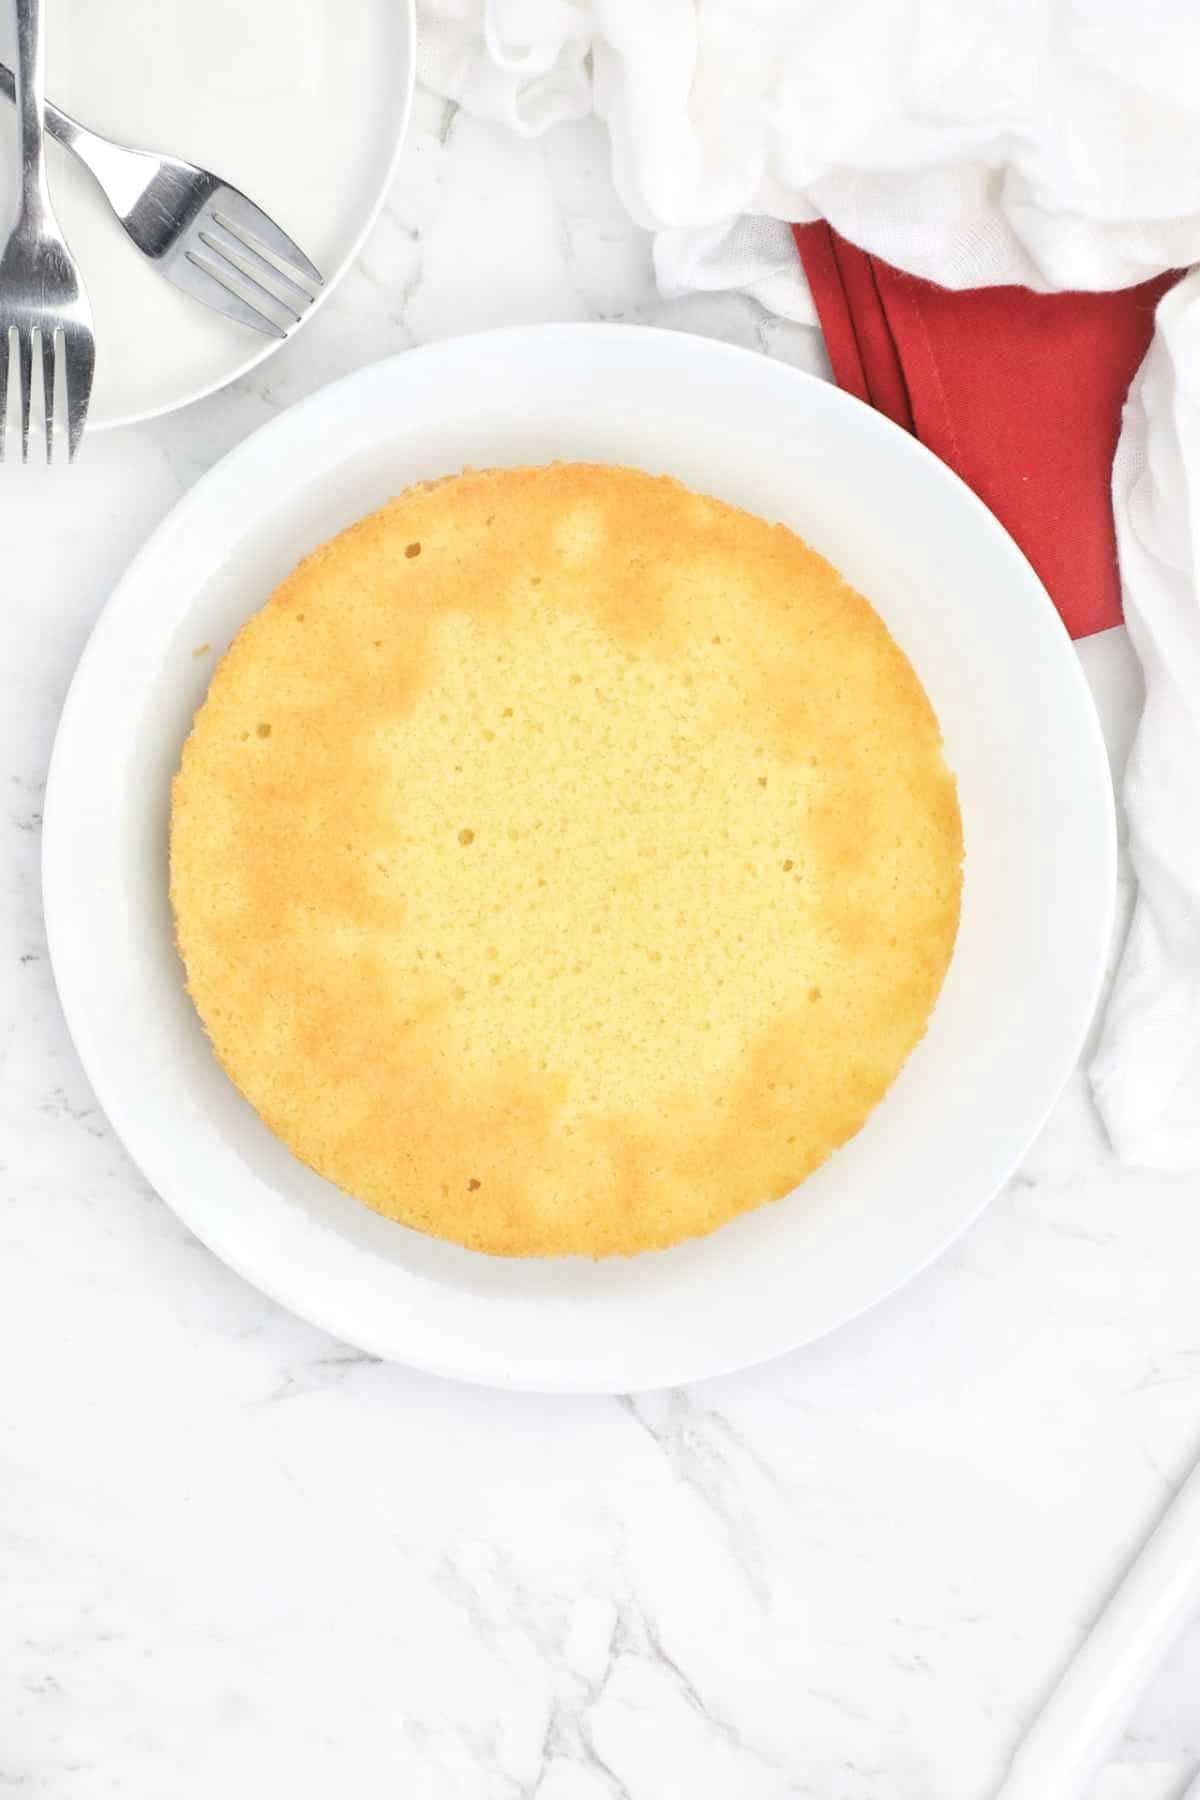 round sponge cake on a white plate.